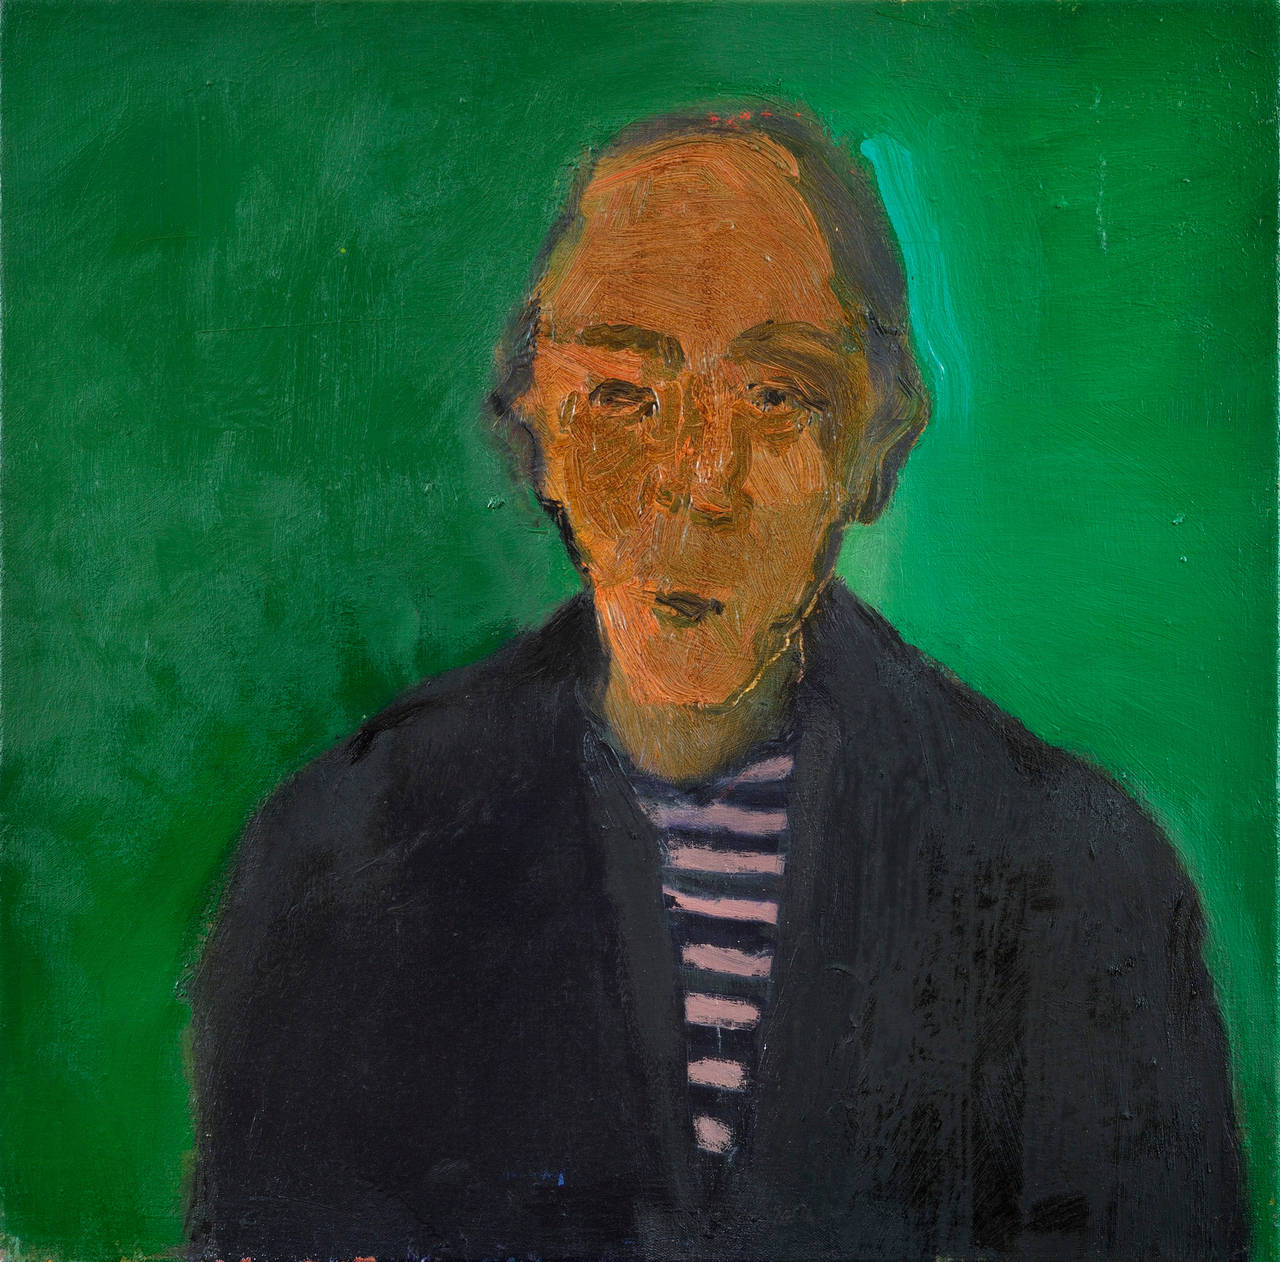 Jennifer Hornyak Figurative Painting - Man with Striped Shirt - green, male portrait figurative still life oil painting